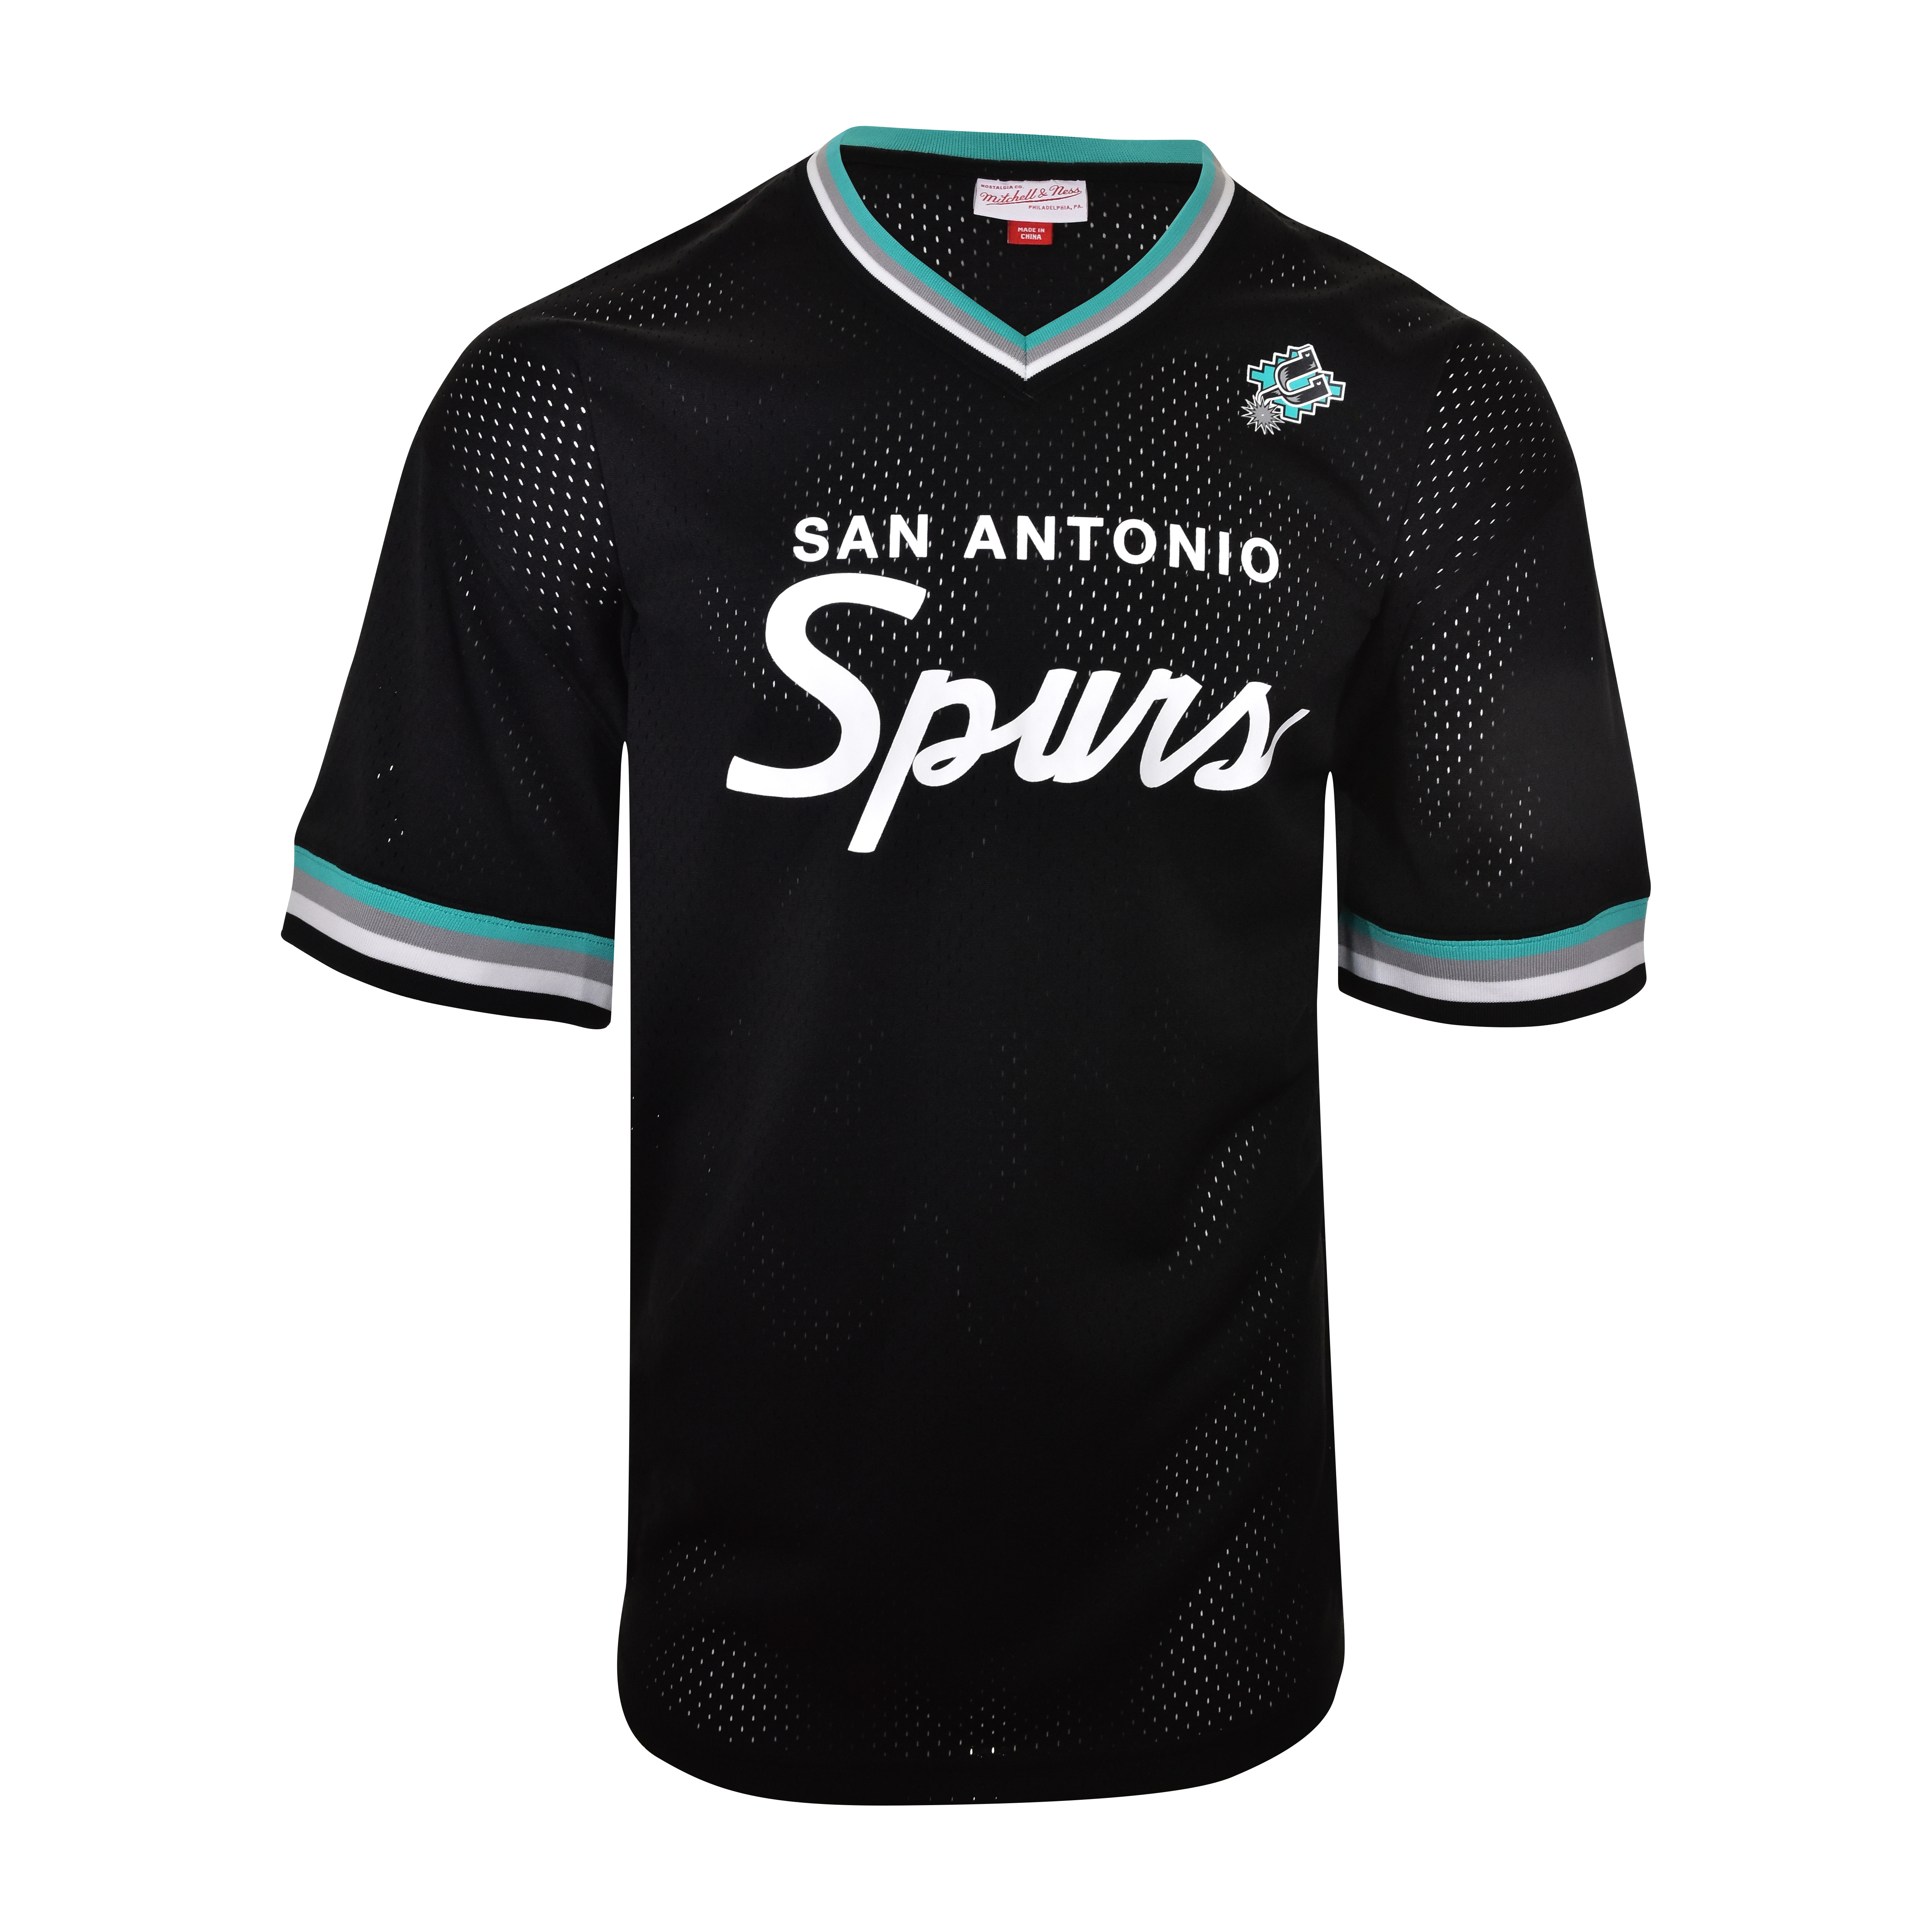 San Antonio Spurs Tony Parker Sleeved Camo Jersey 